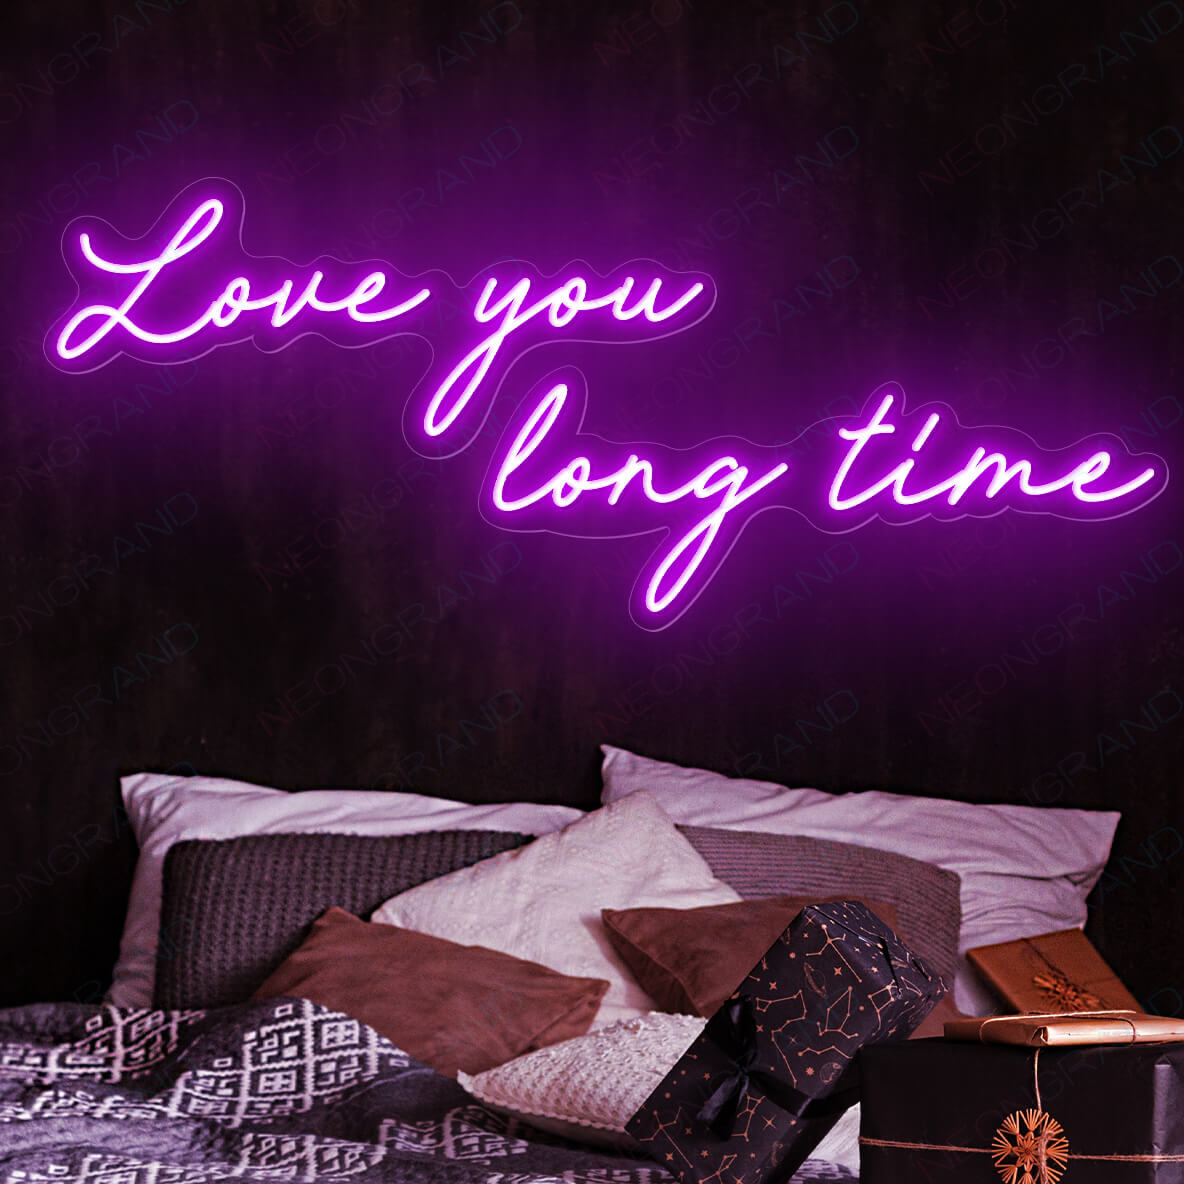 Love You Long Time Neon Sign Love Led Light purple